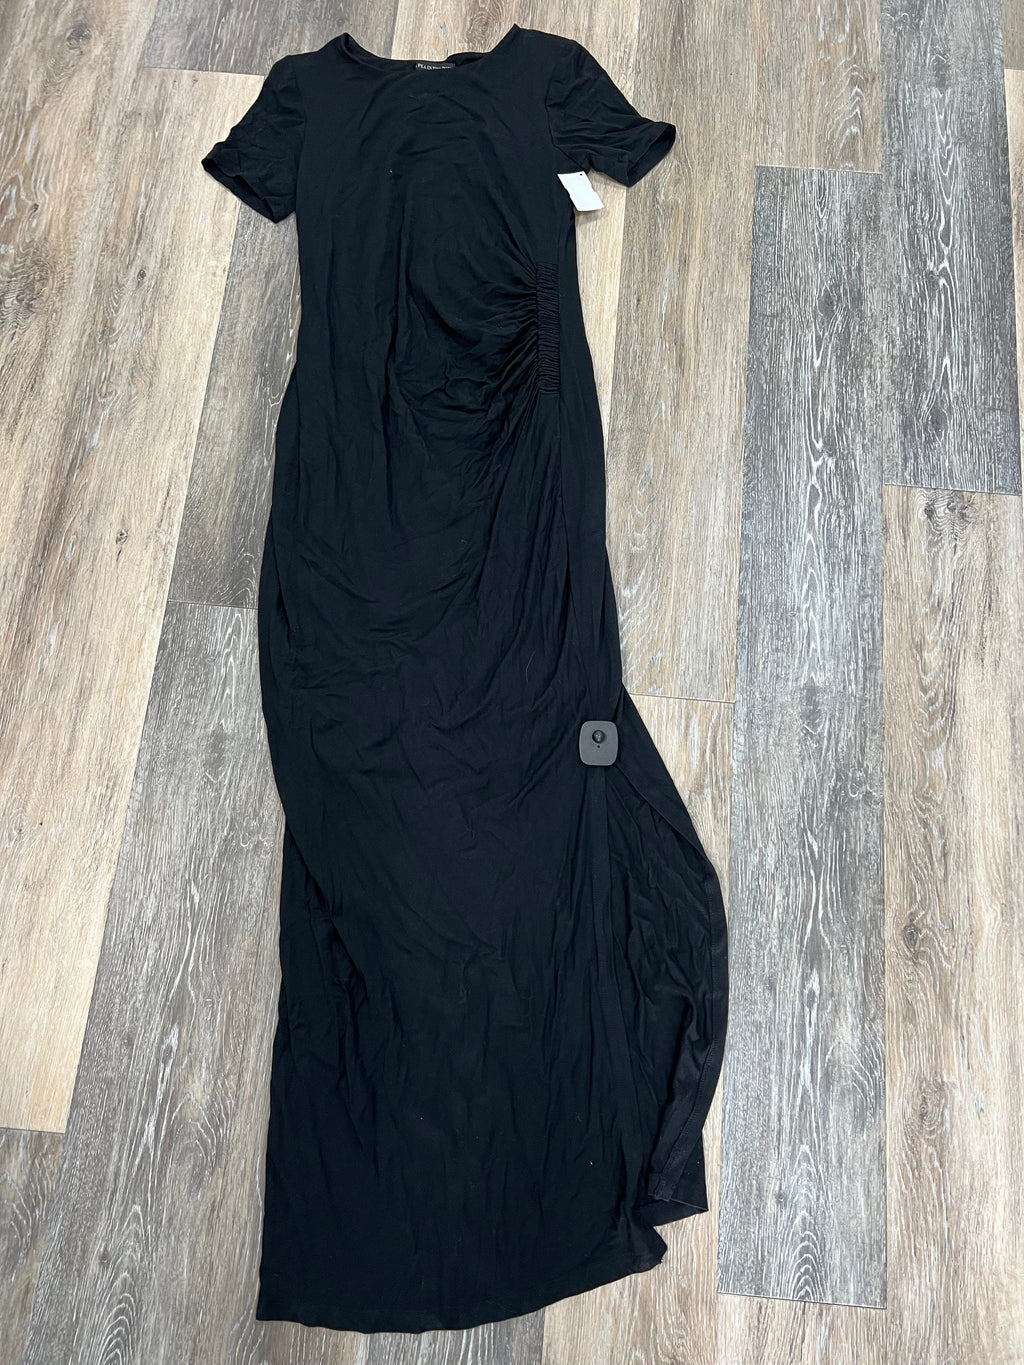 PinkBlush Ivory Grey Striped Fitted Short Sleeve Maternity Dress | Gently  Used - Size Medium